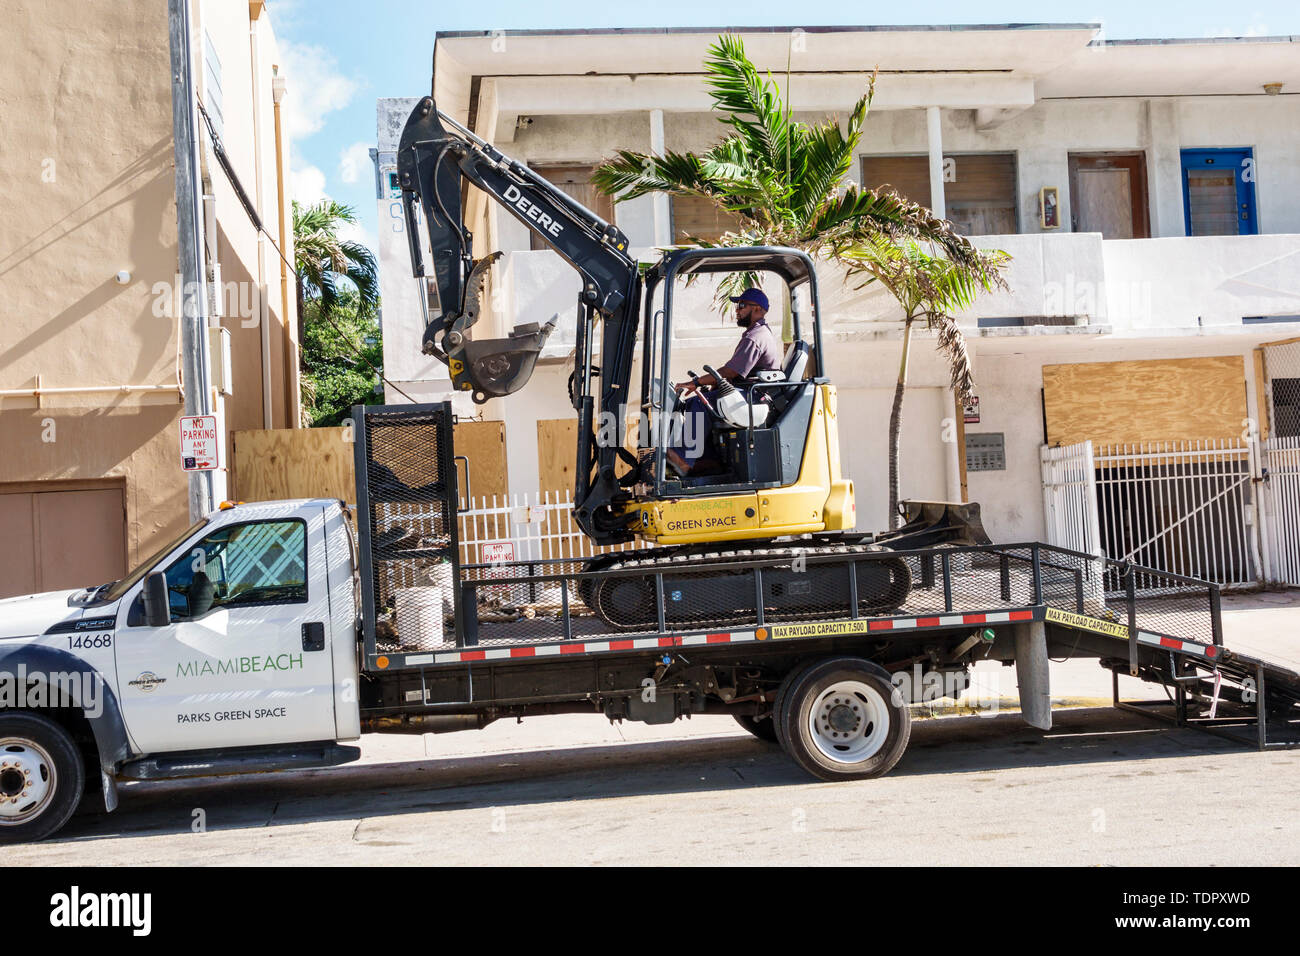 Miami Beach Florida,North Beach,City of,Miami Beach,green space parks department,construction equipment,compact excavator,John Deere,truck,man men mal Stock Photo